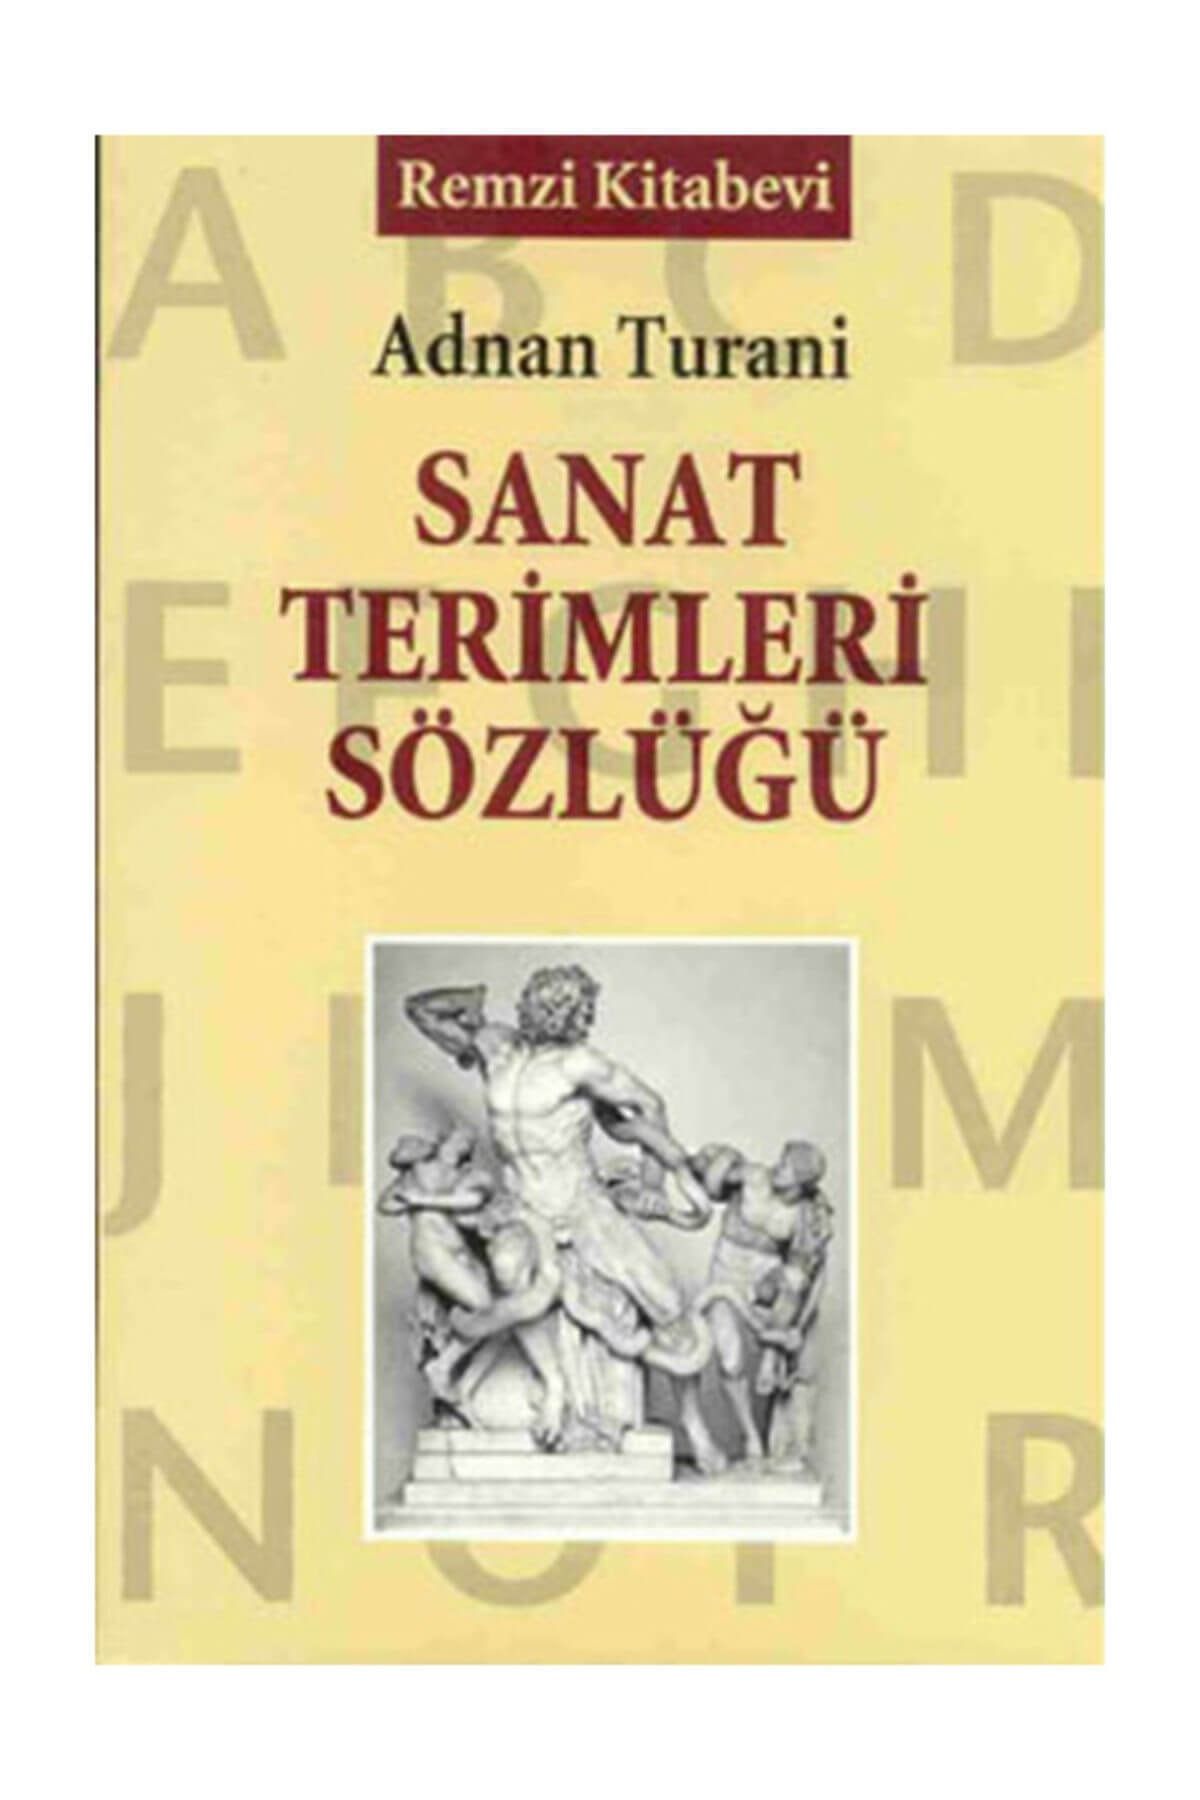 Remzi Kitabevi Sanat Terimleri Sözlüğü - Adnan Turani